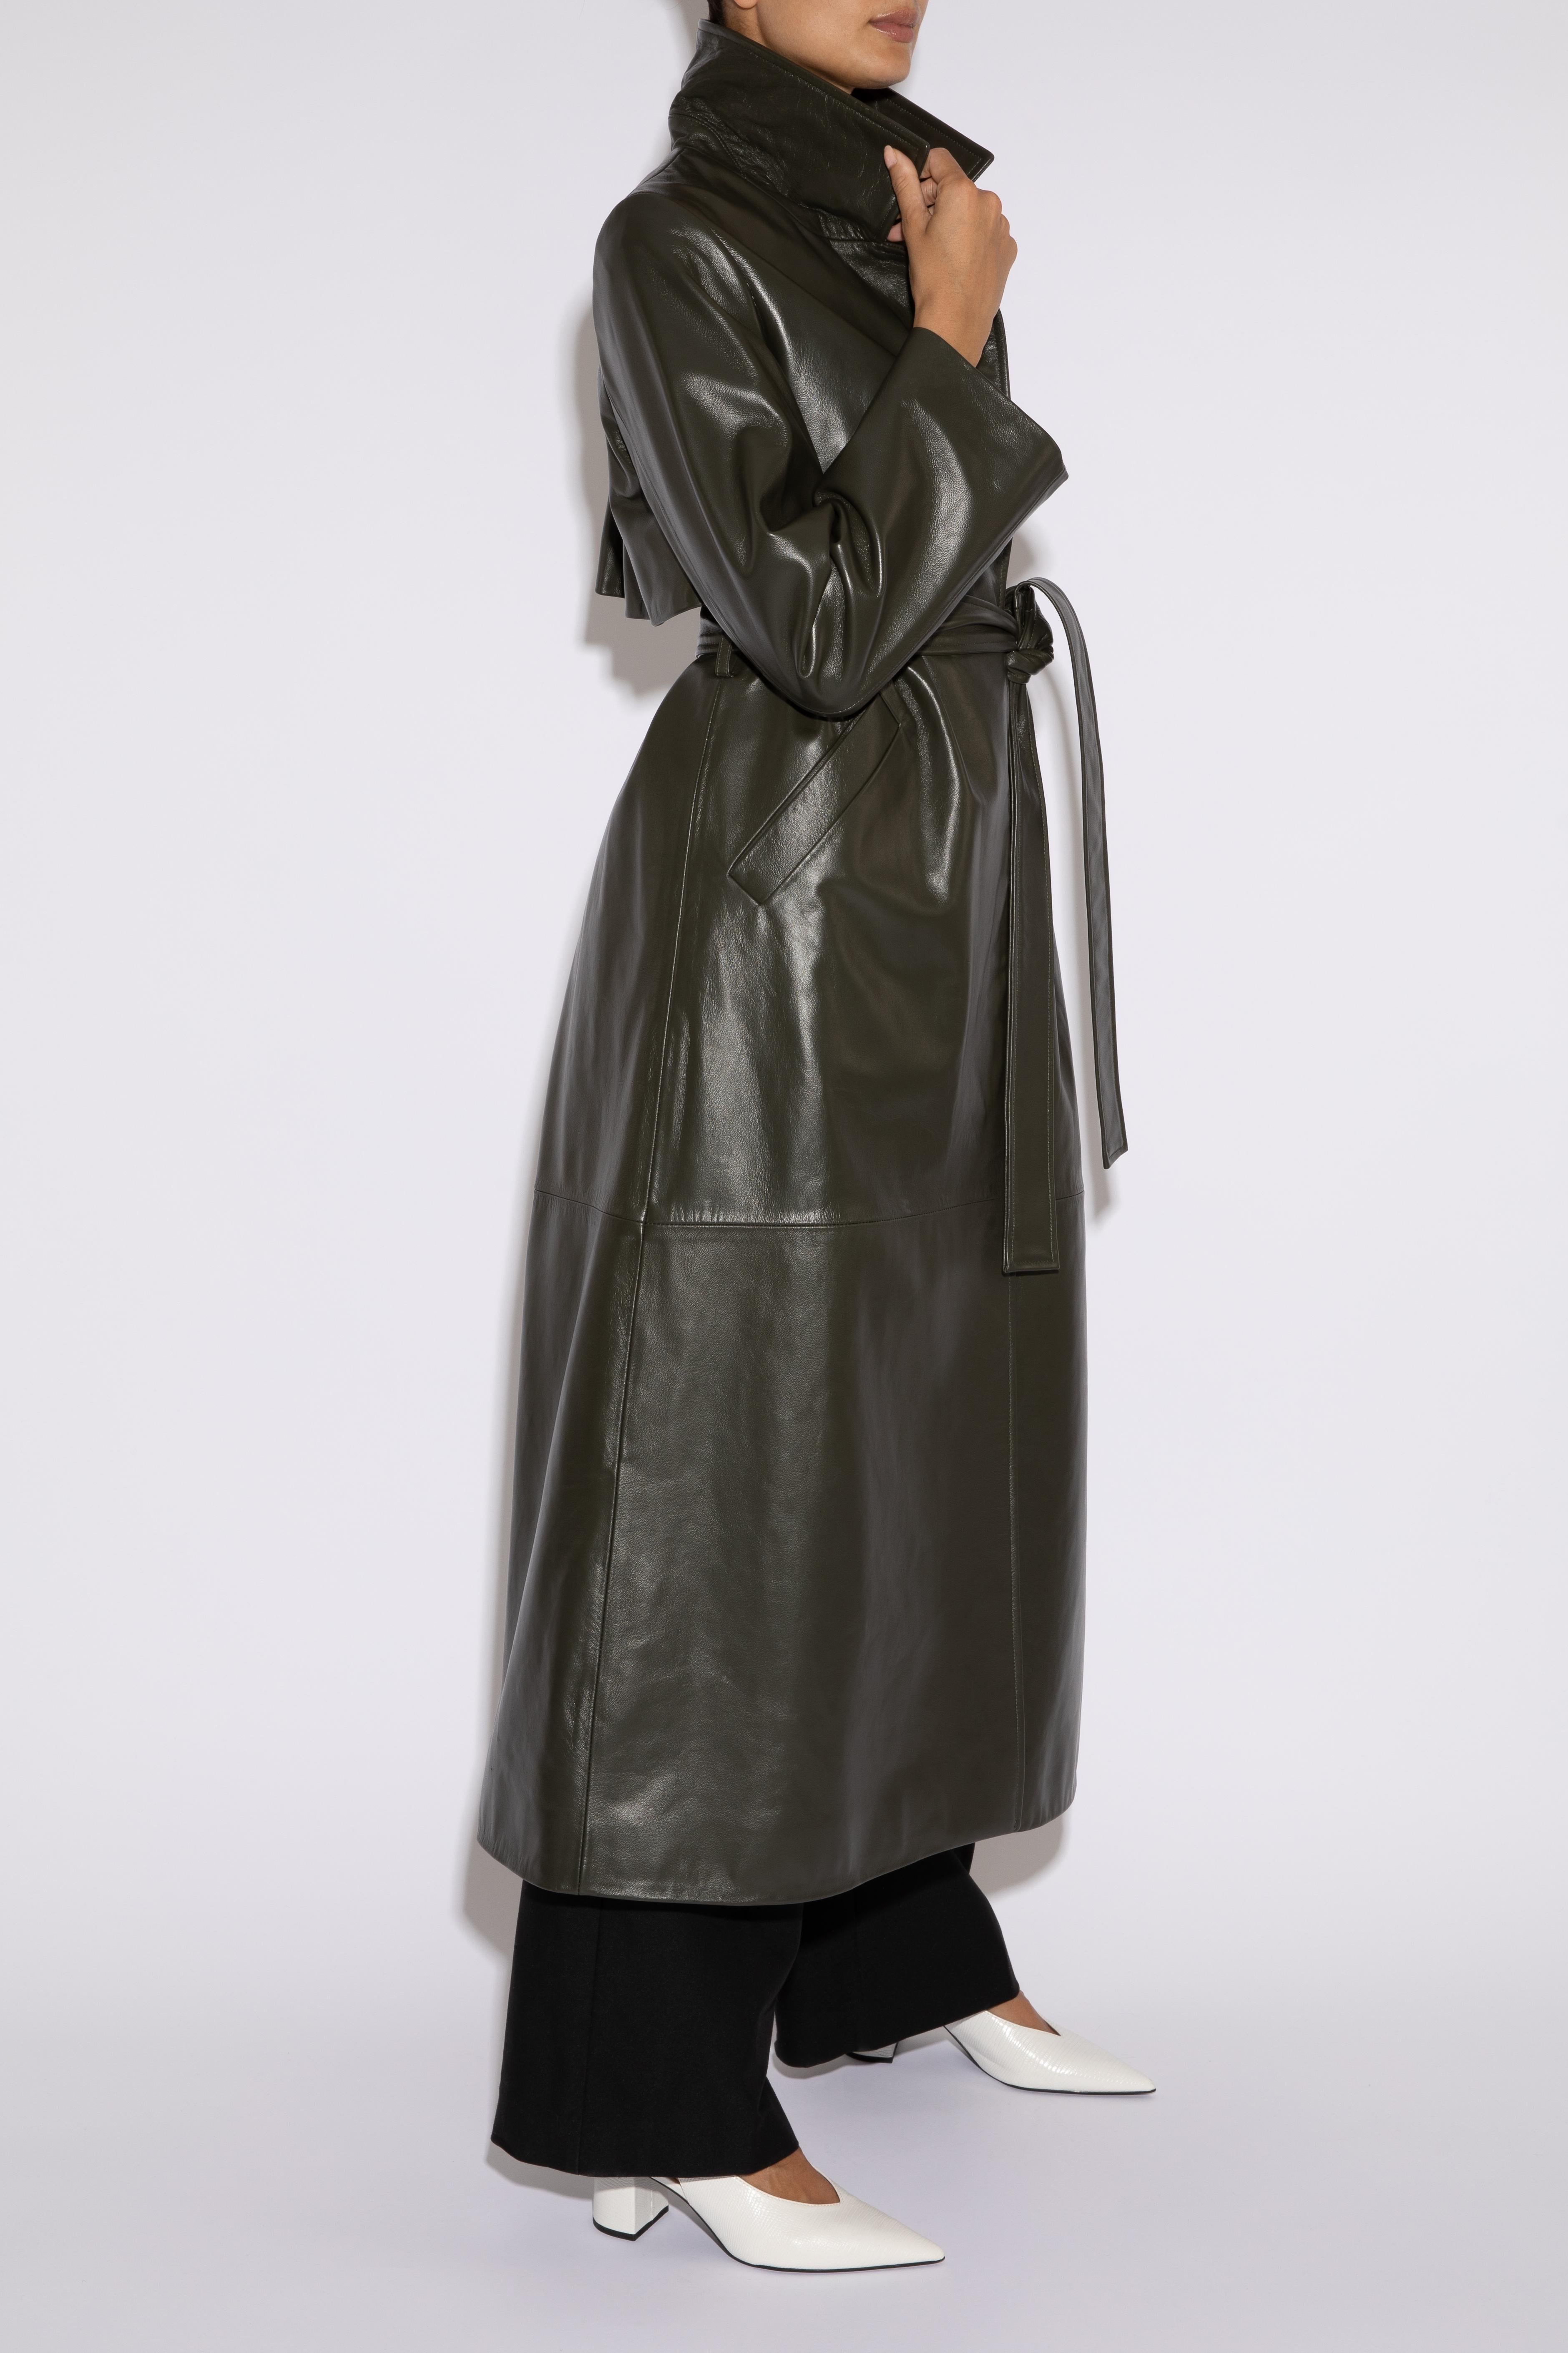 Women's Verheyen London Leather Trench Coat in Dark Khaki Green - Size uk 8 For Sale